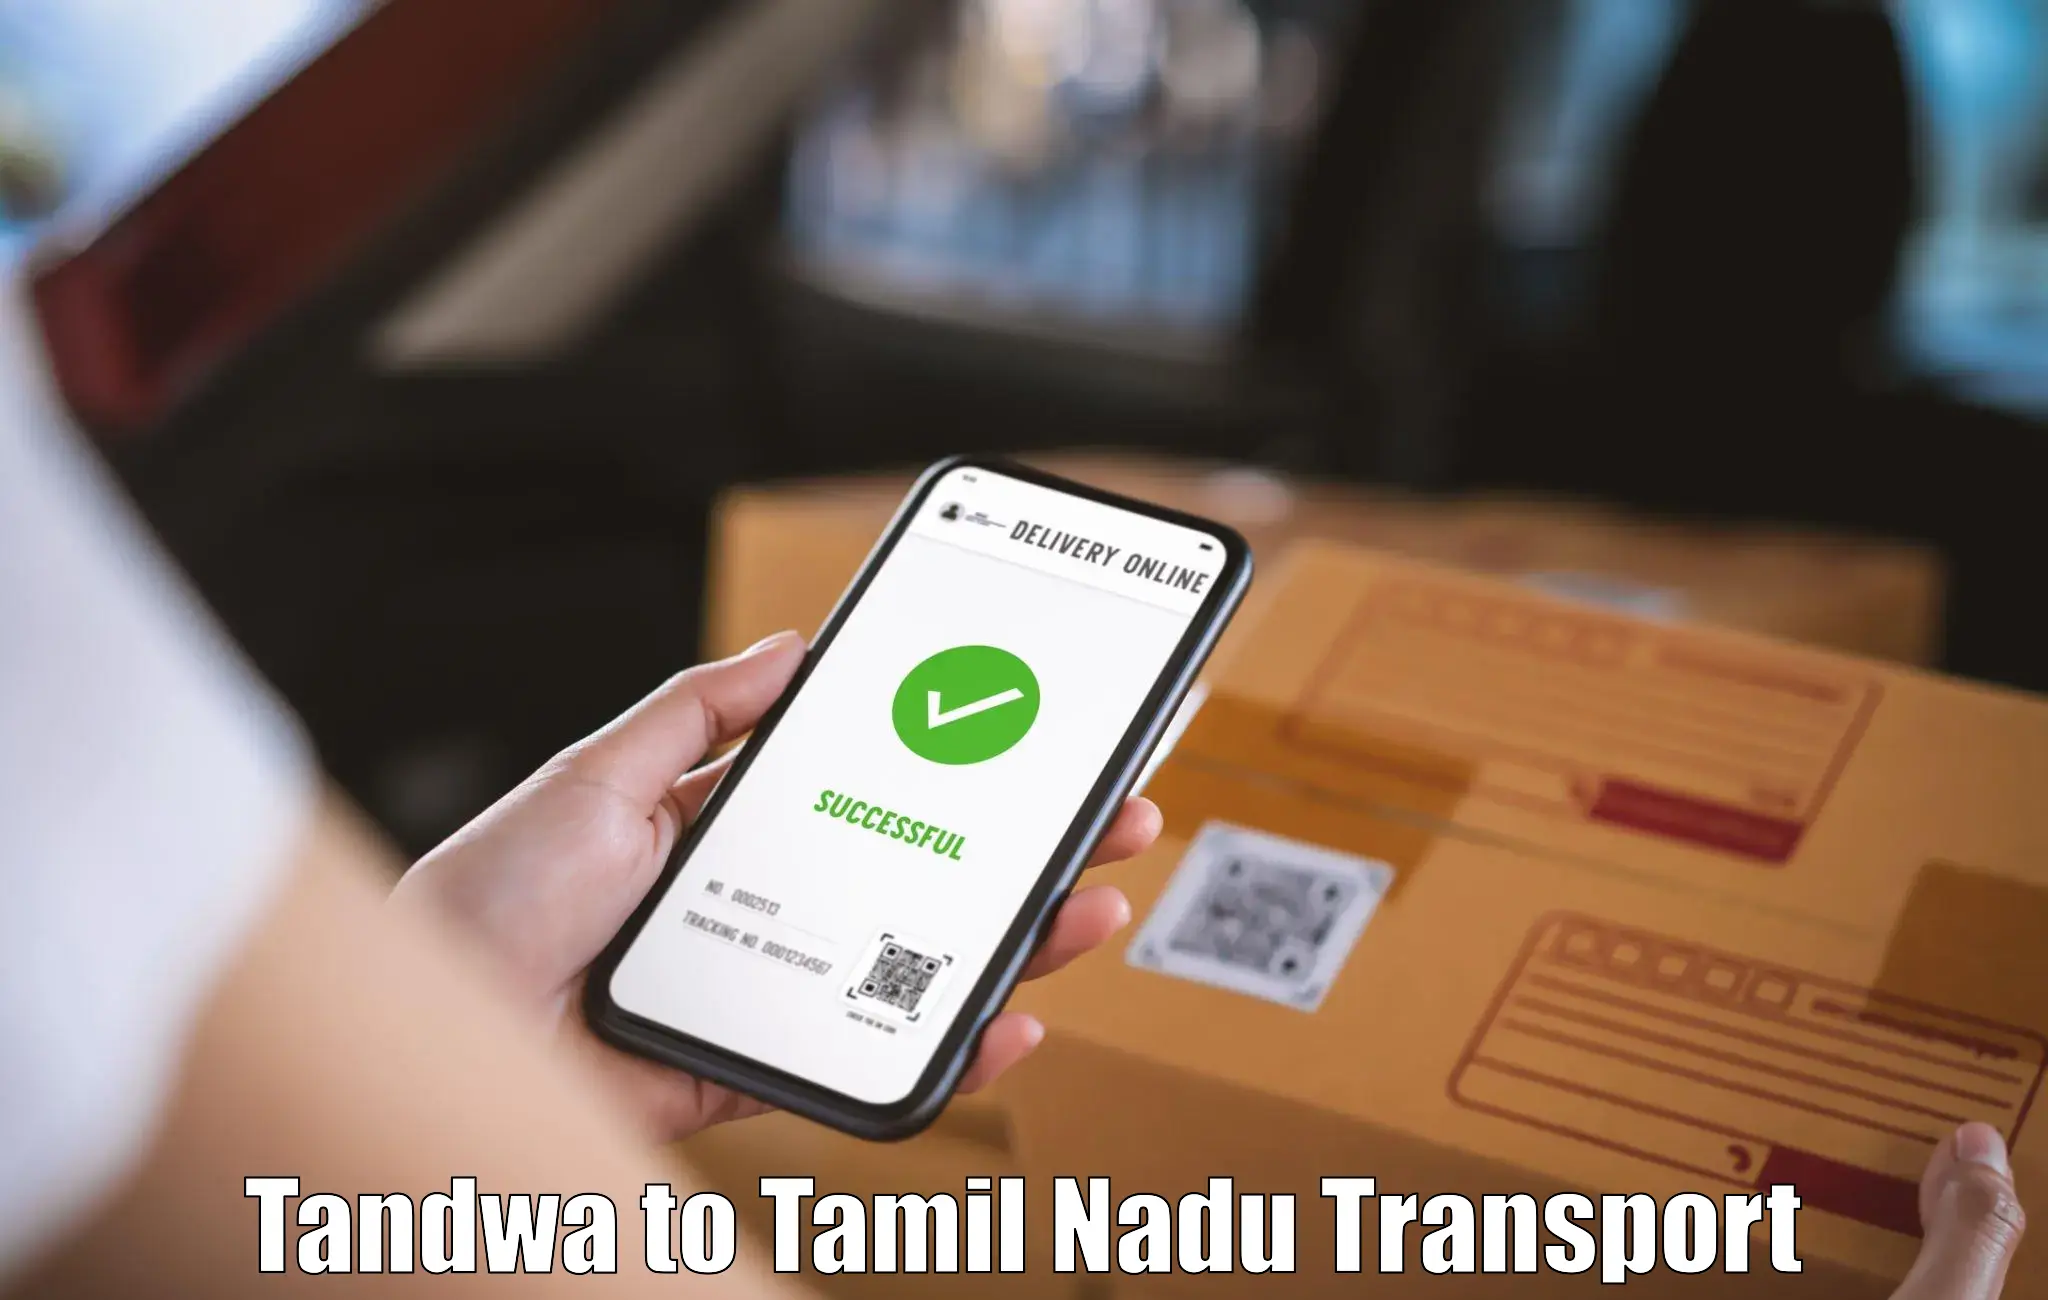 Truck transport companies in India Tandwa to Tamil Nadu